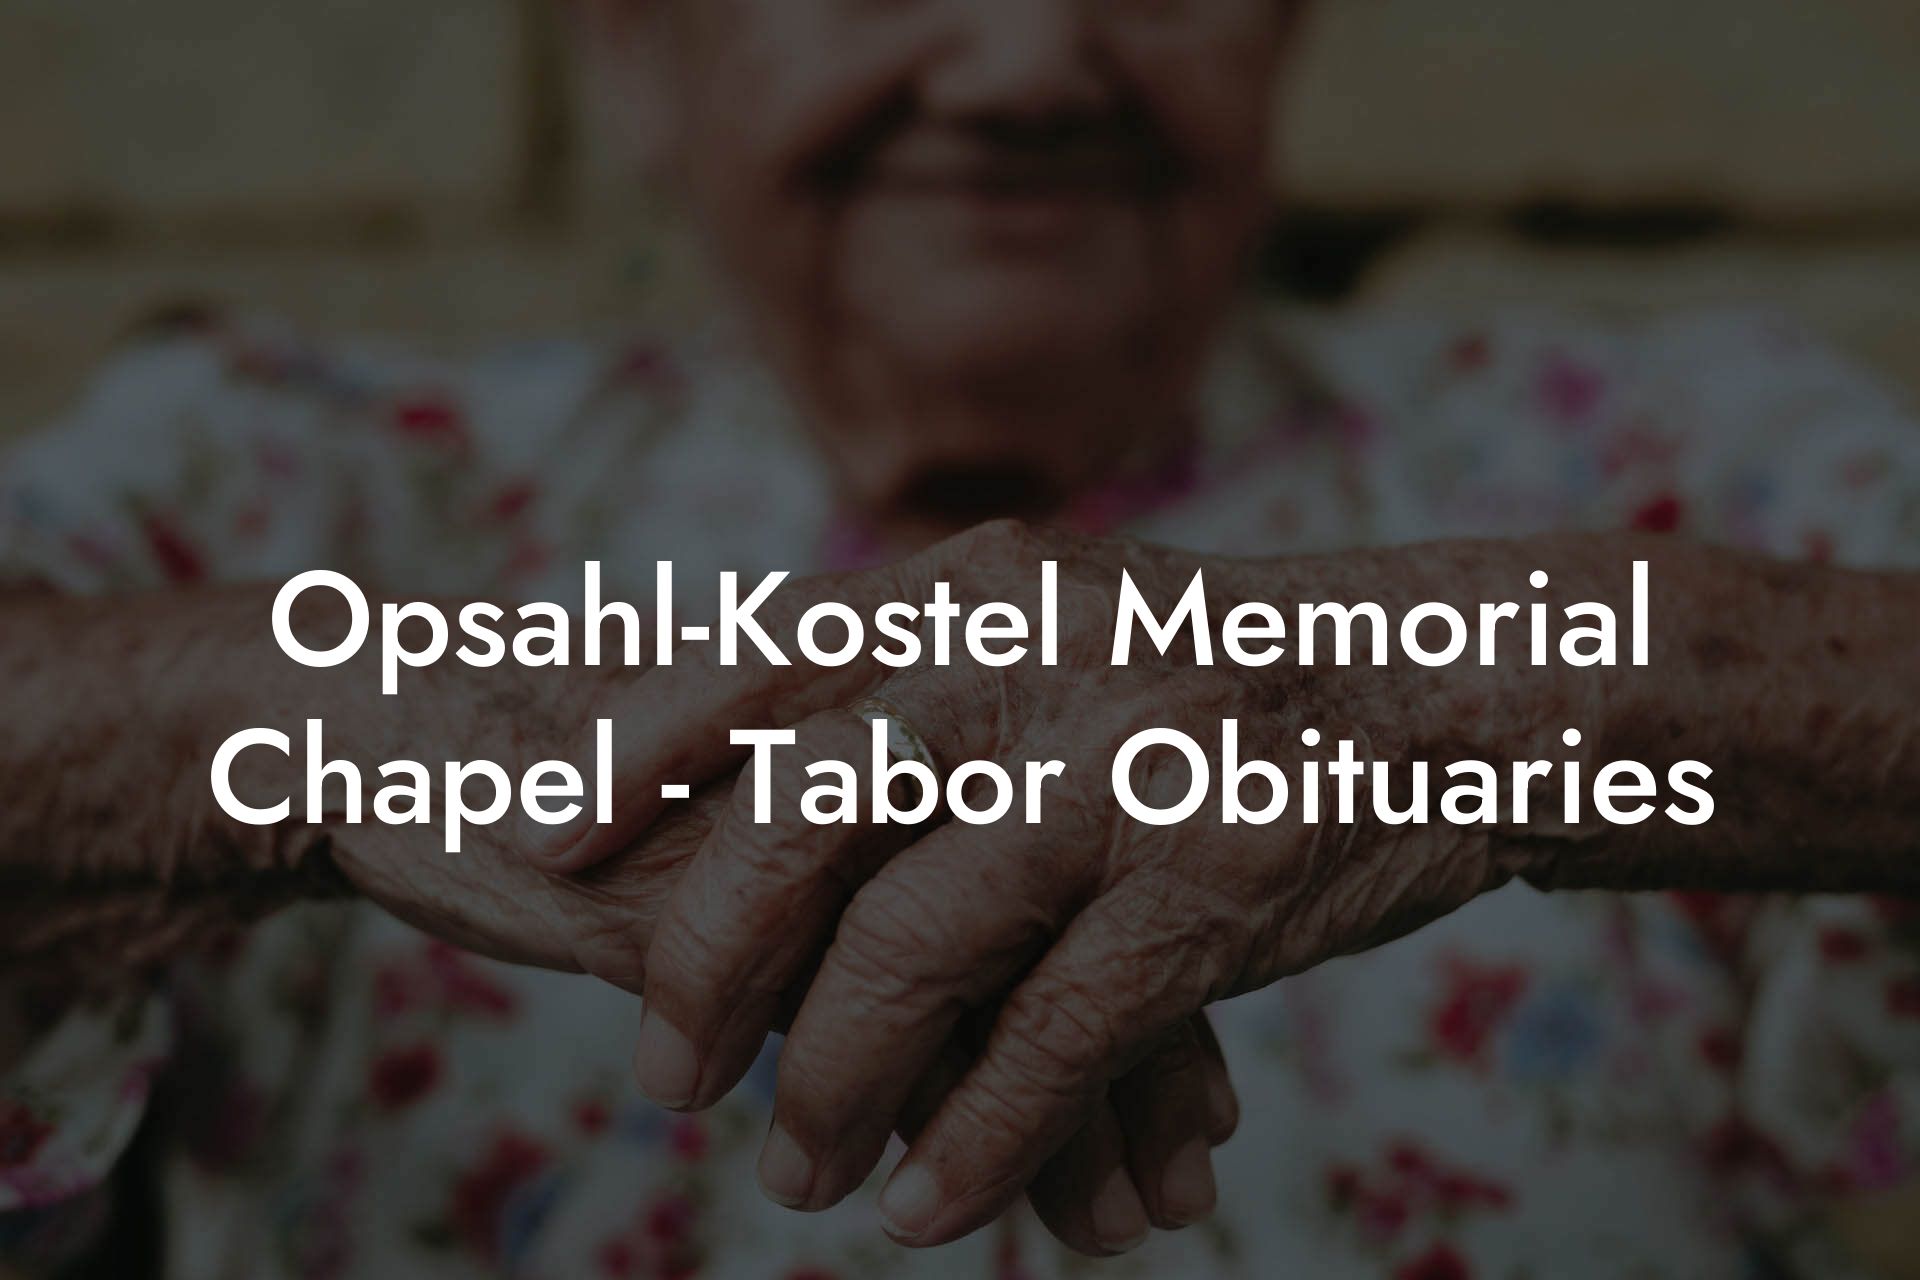 Opsahl-Kostel Memorial Chapel - Tabor Obituaries